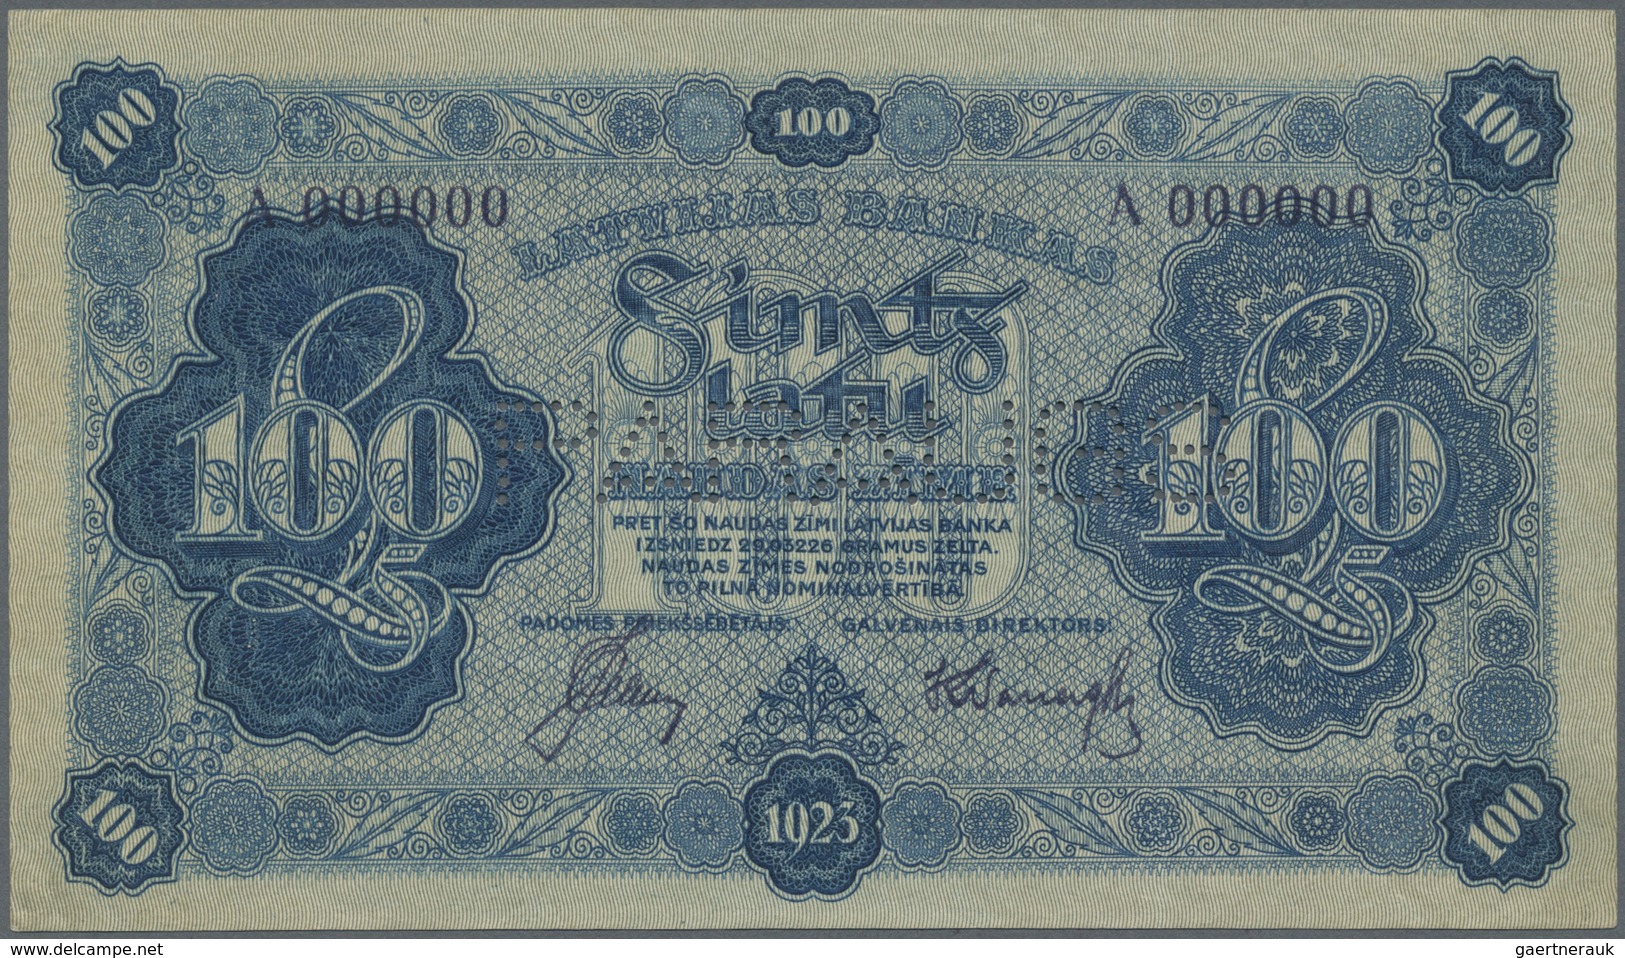 Latvia / Lettland: Rare 100 Latu 1923 SPECIMEN P. 14bs, Series A000000, Sign. Celms, Perforated "PAR - Latvia